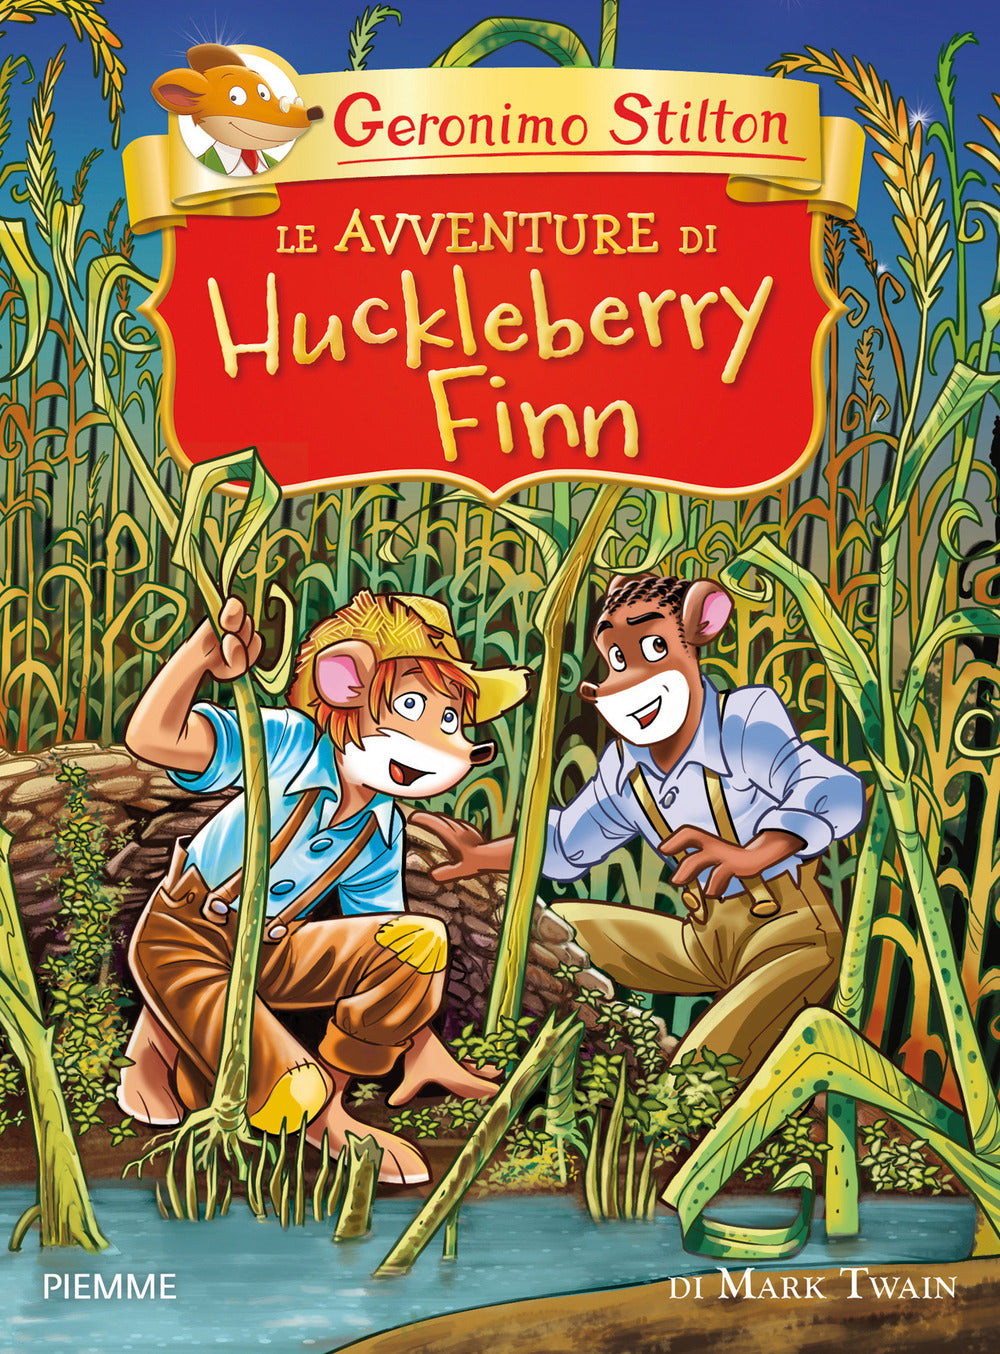 Le avventure di Huckleberry Finn di Mark Twain.